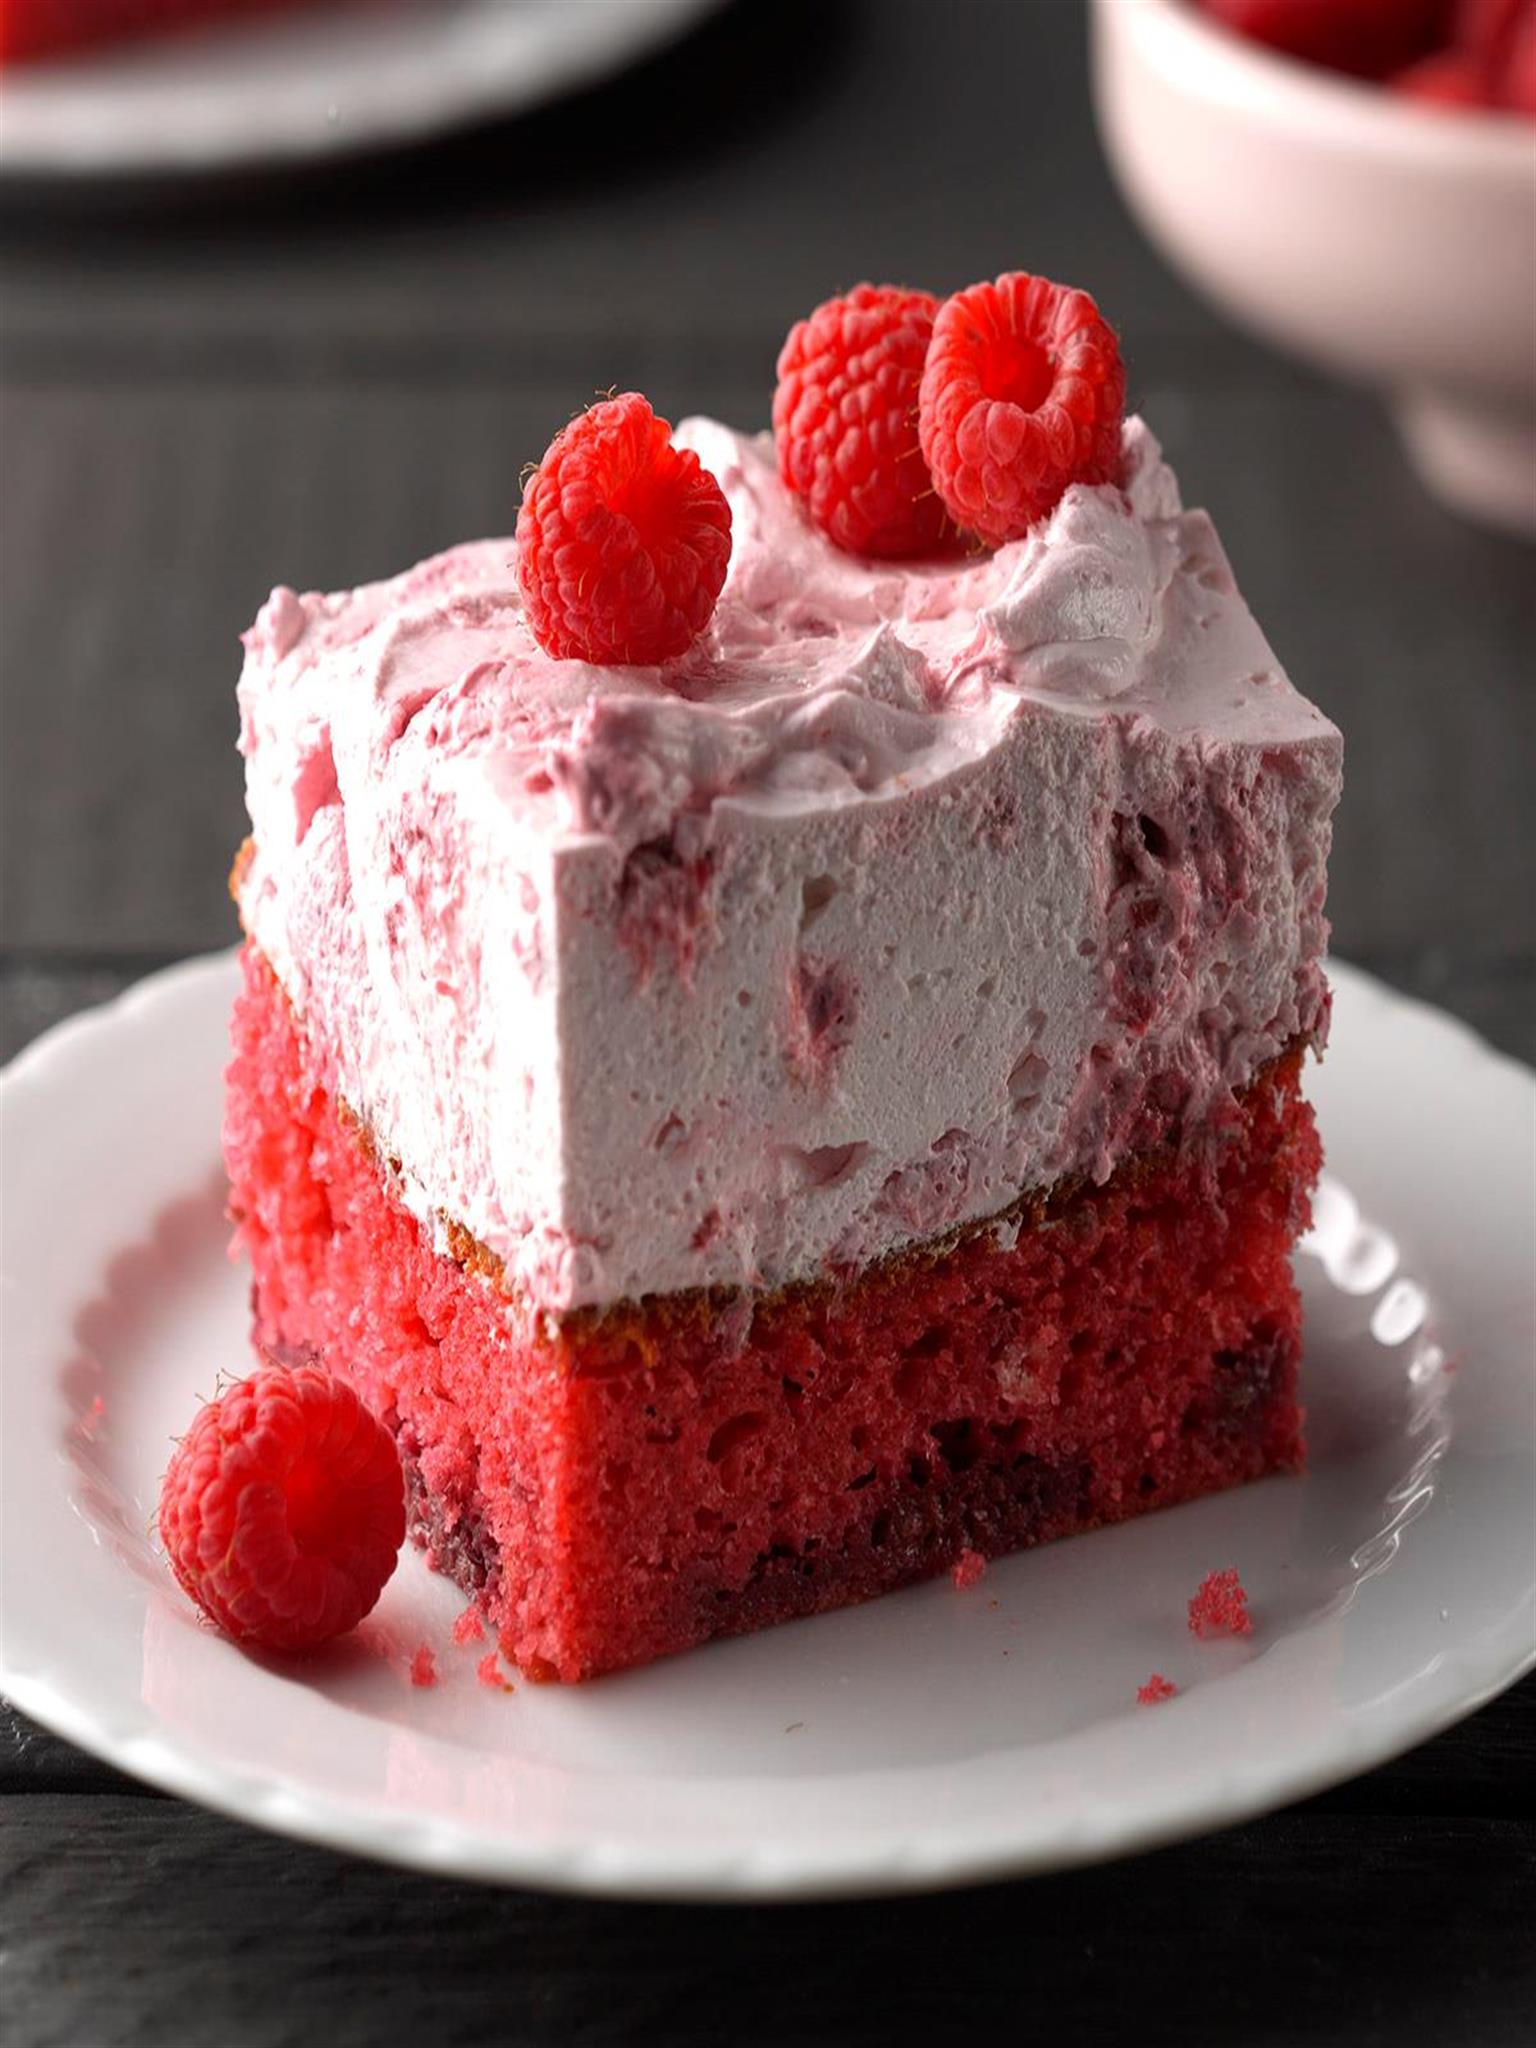 Share 76 Raspberry Flavored Cake Indaotaonec 7728